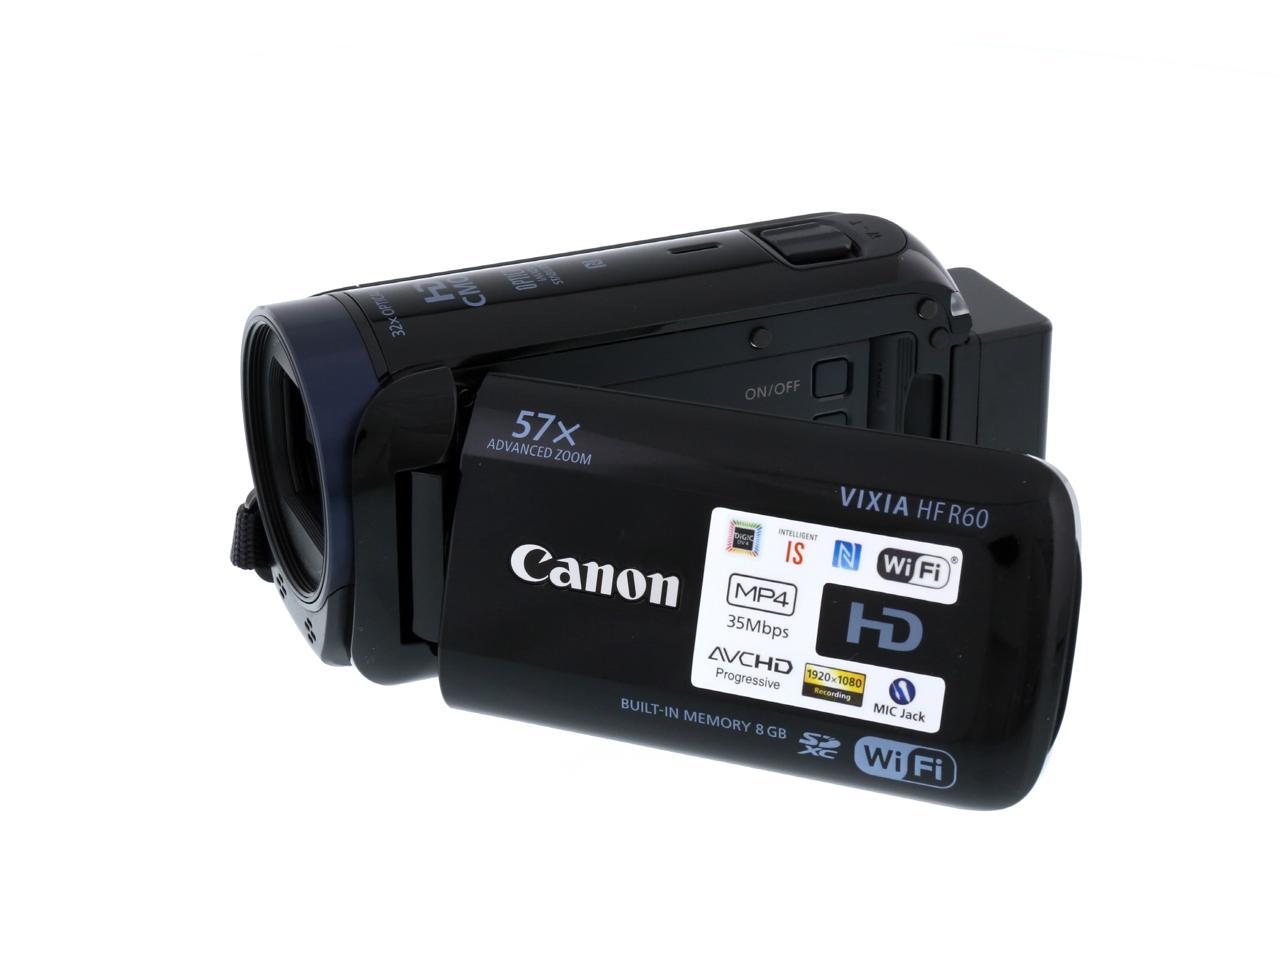 Canon VIXIA HF R60 0279C001 Black Full HD HDD/Flash Memory Camcorder